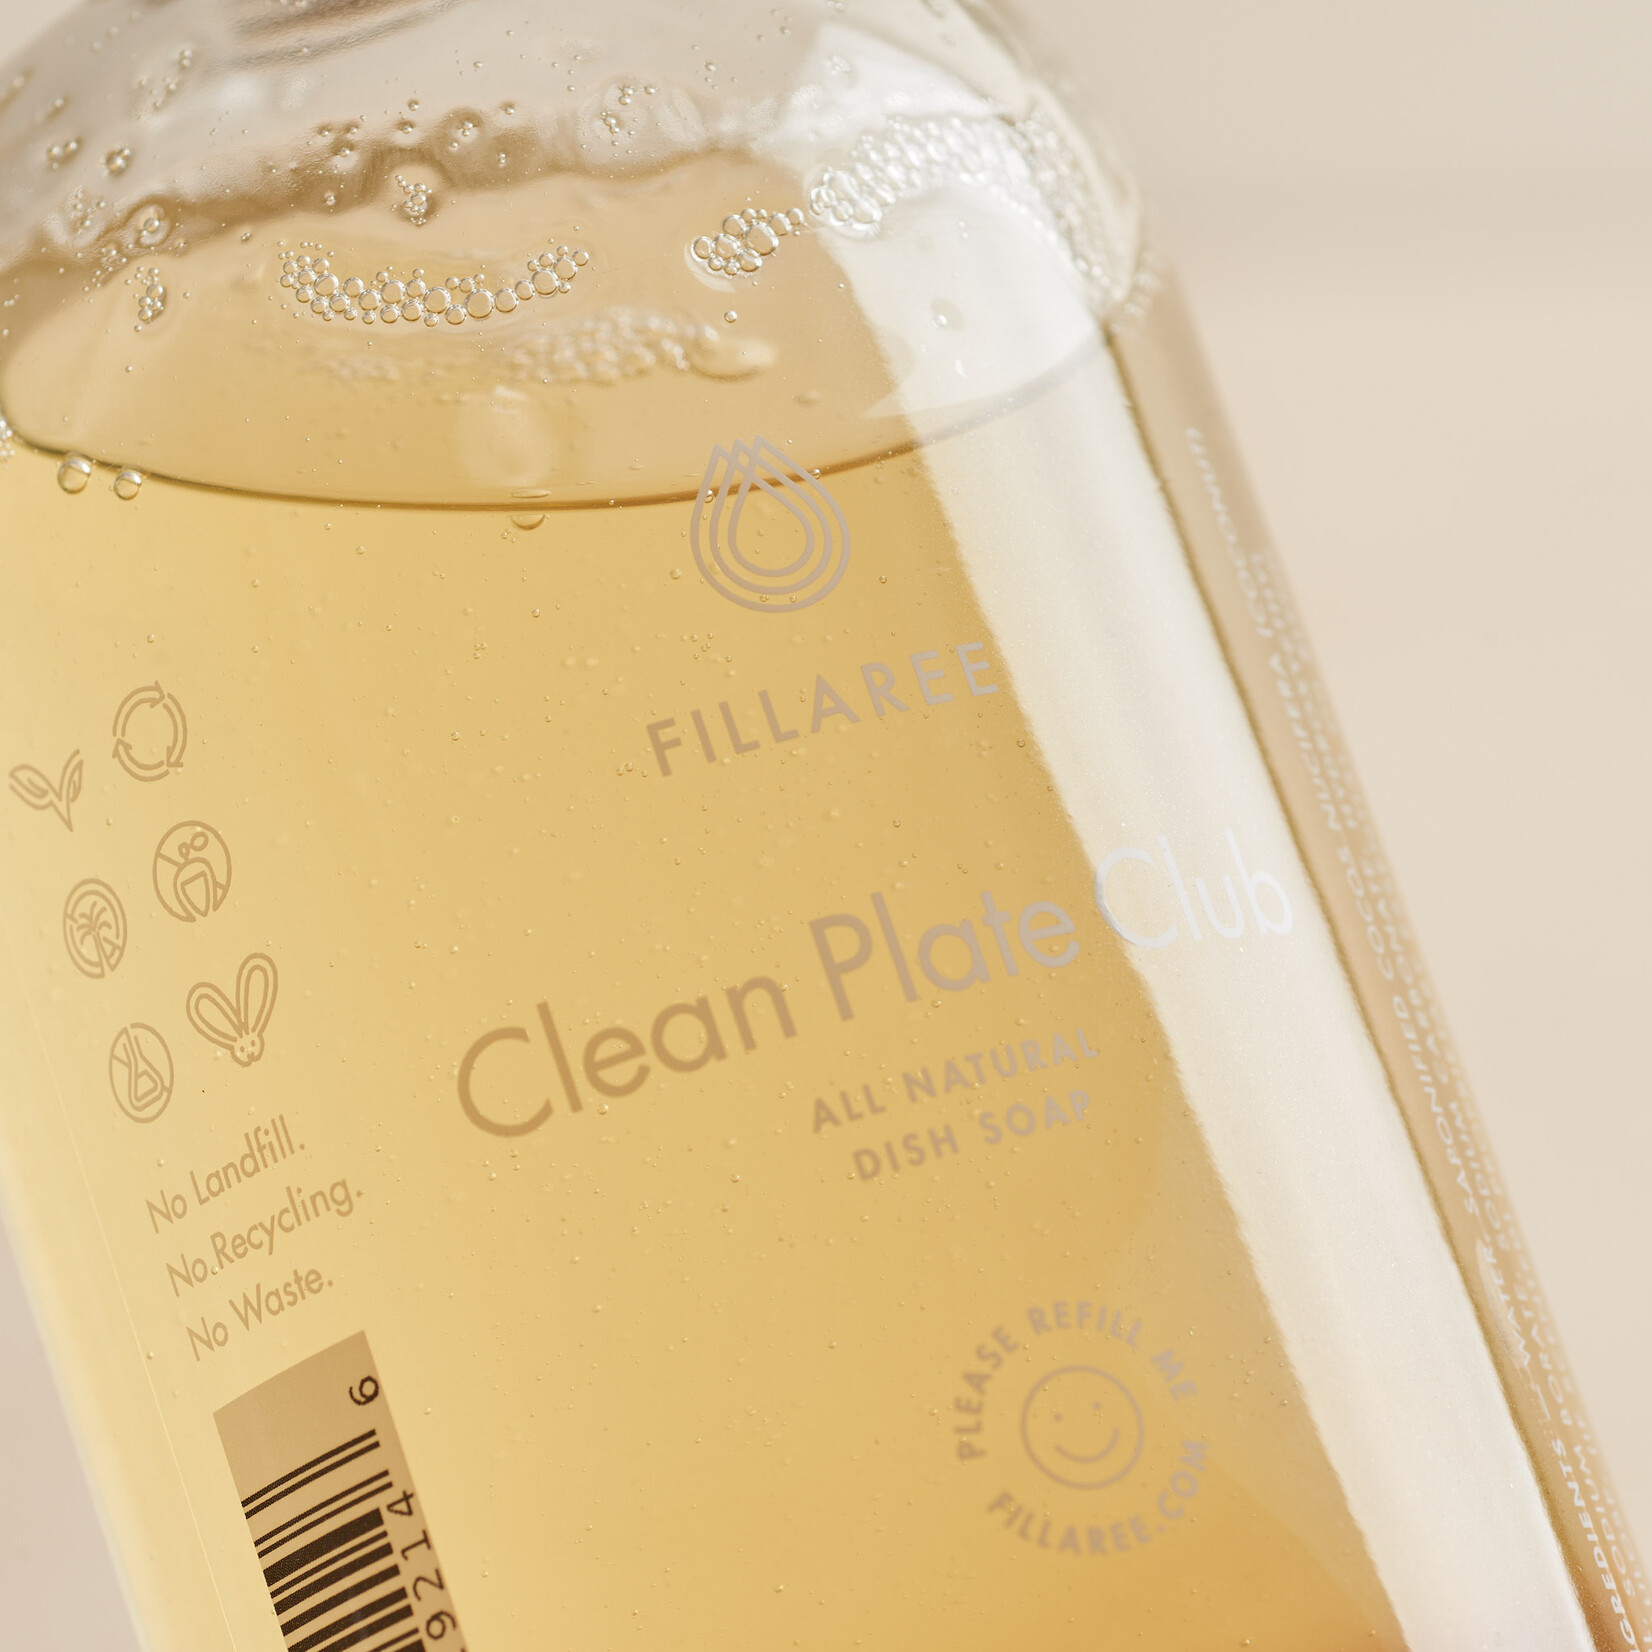 Non-toxic Dish Soap- citrus 16 oz bottle